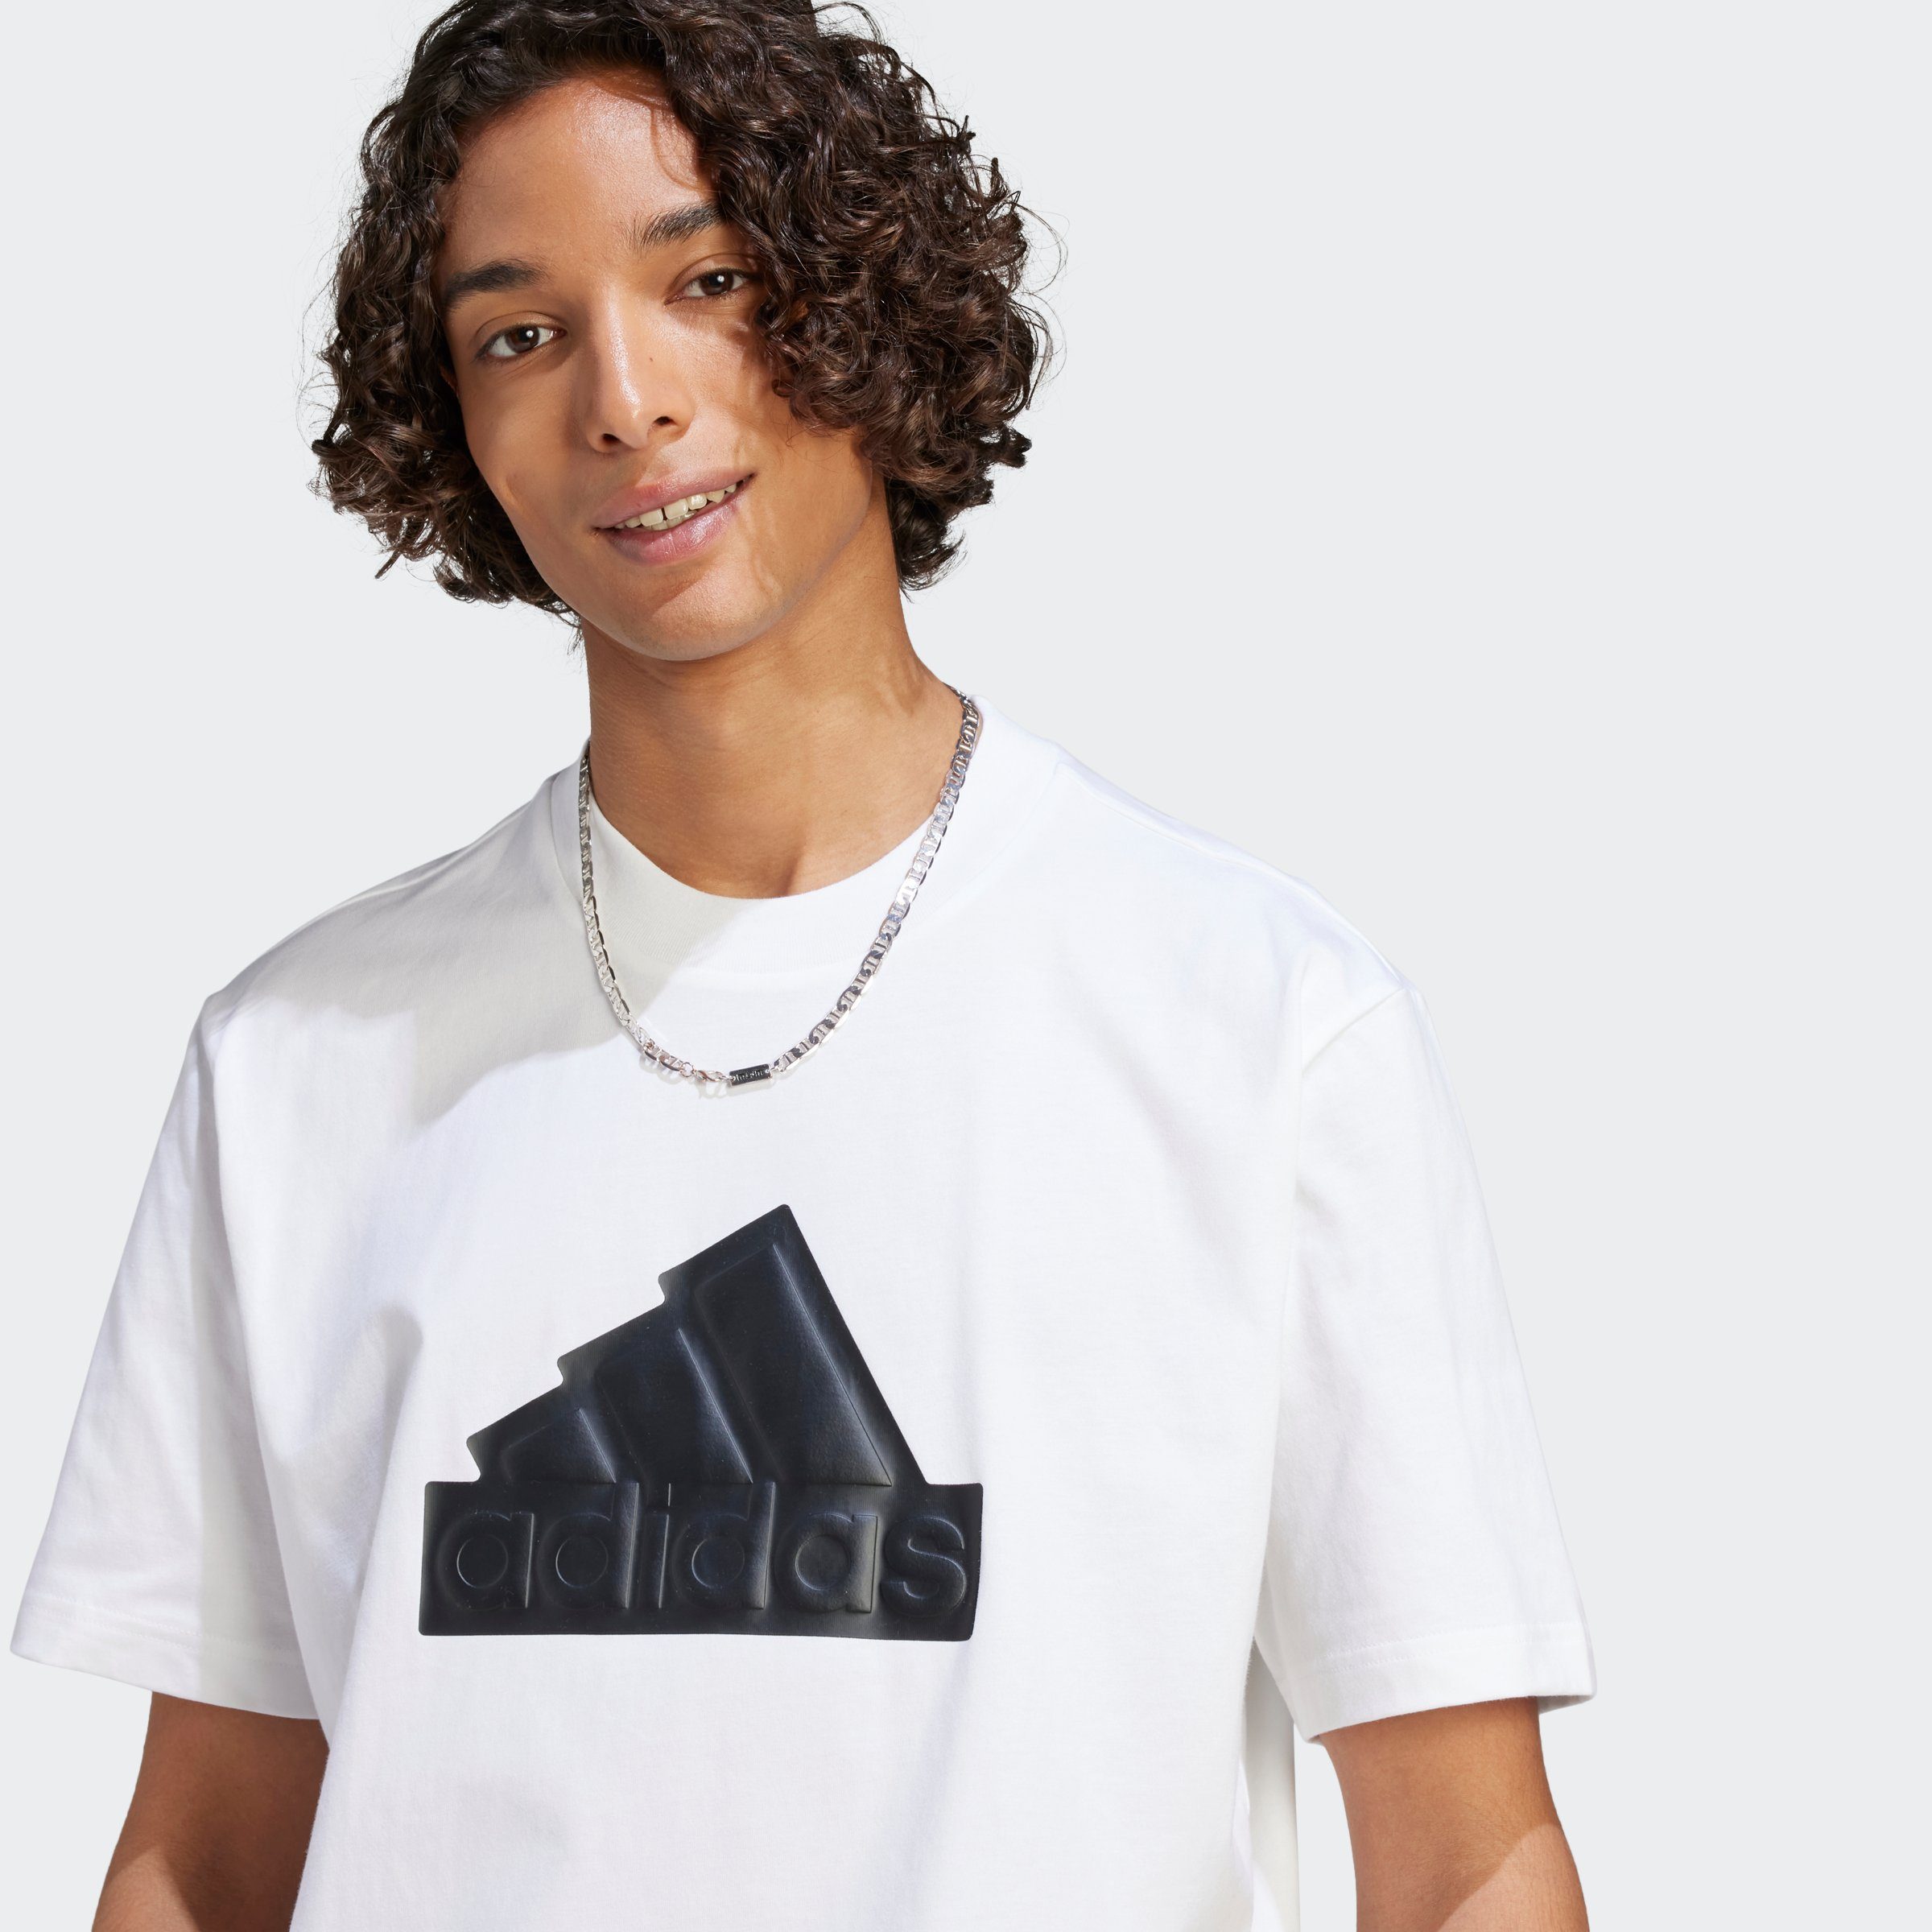 FUTURE / BADGE ICONS Black White OF BOMBER T-Shirt Sportswear adidas SPORT